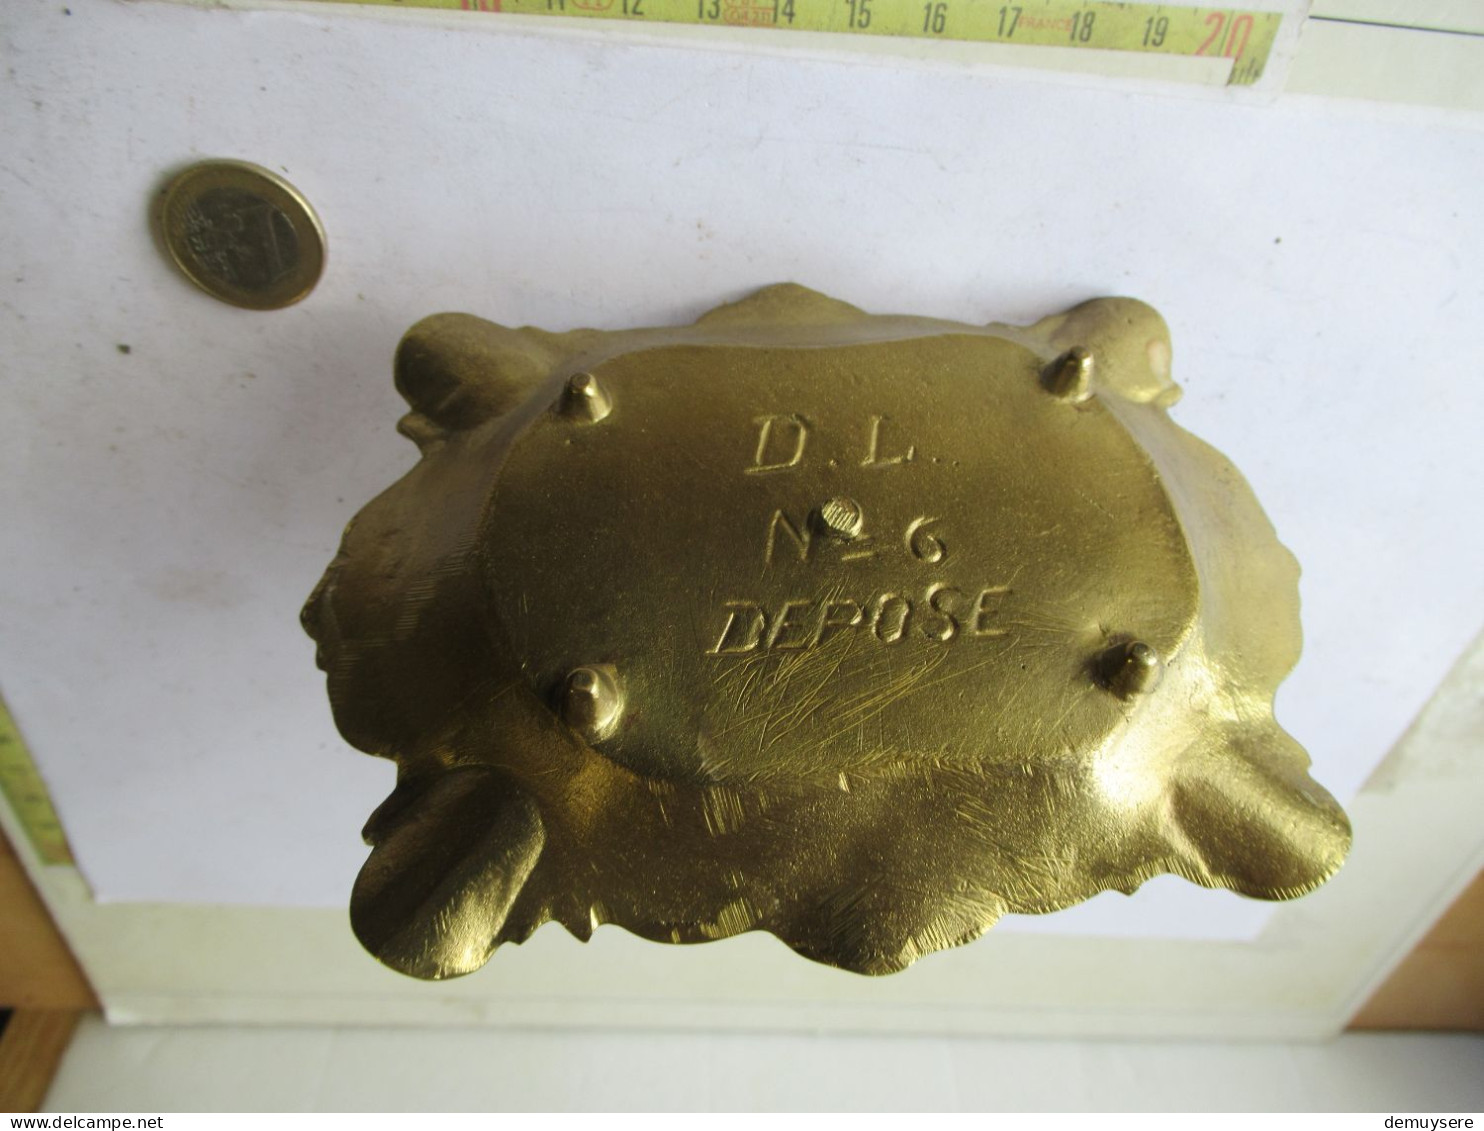 Lade 2000 - Bronzen Asbak Met Luciferhouder - Cendrier En Bronze Avec Porte Allumettes - 500 Gram - Brons